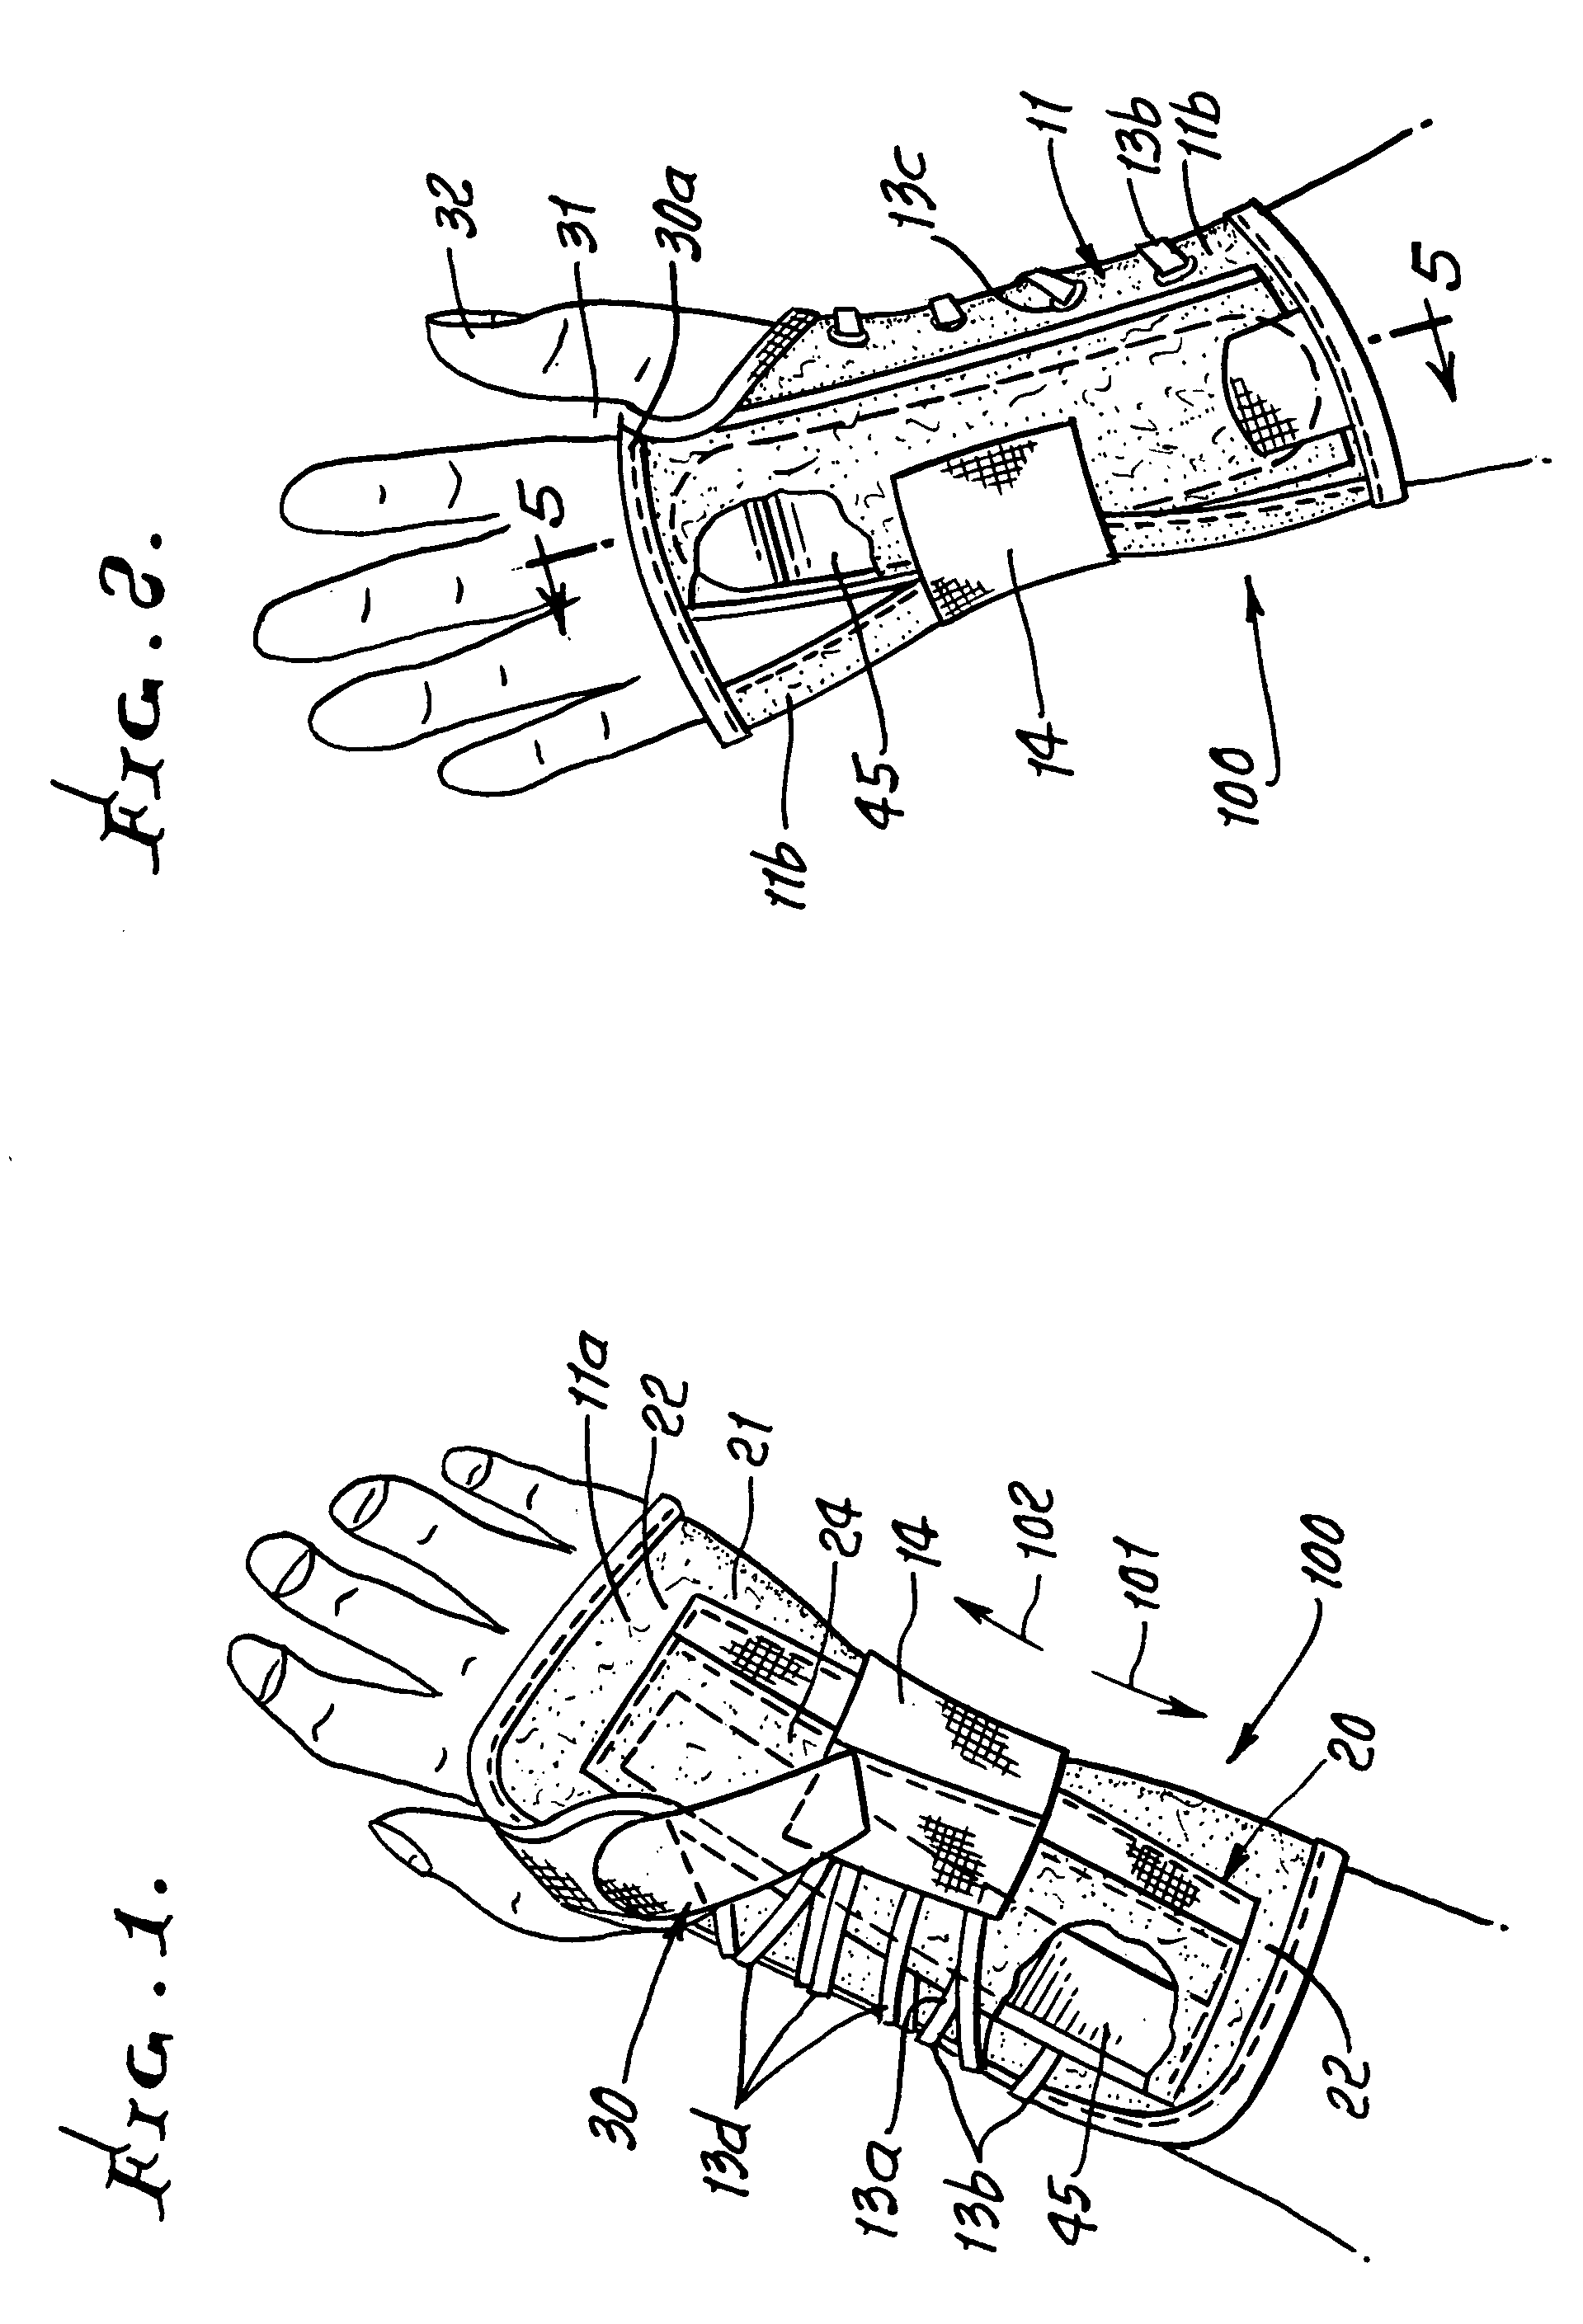 Multi-adjustable wrist brace